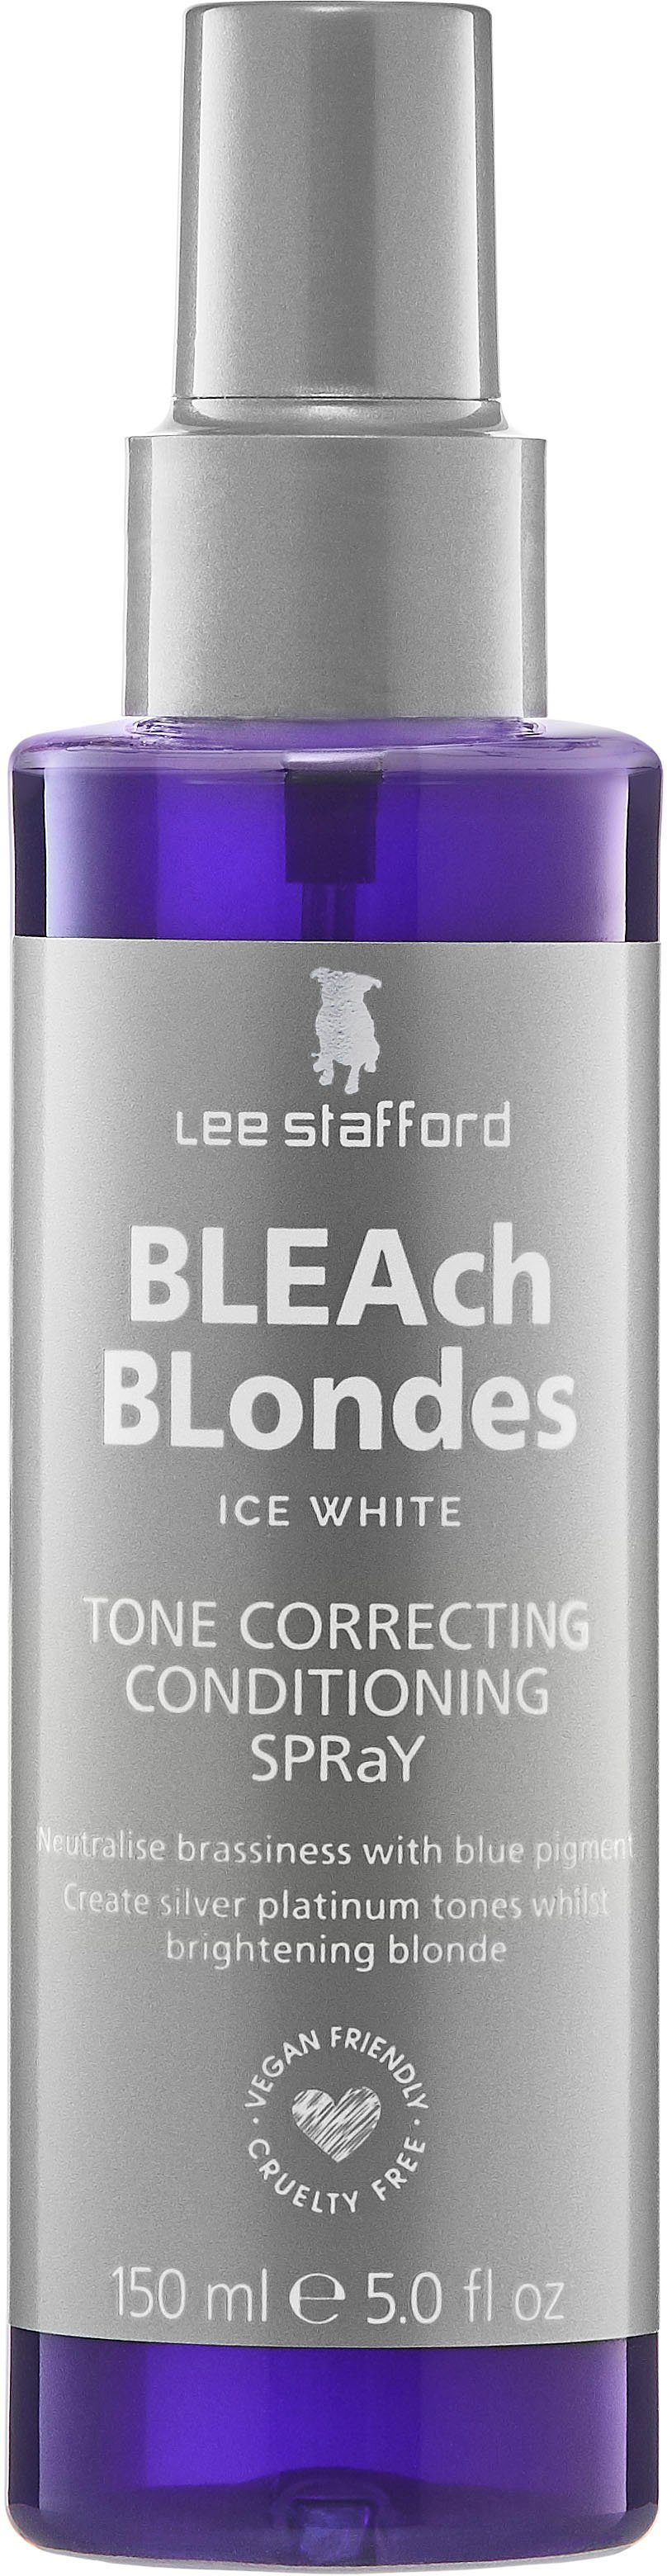 Damen Haarpflege Lee Stafford Leave-in Pflege Bleach Blonde Ice White Tone Correcting Conditioning Spray